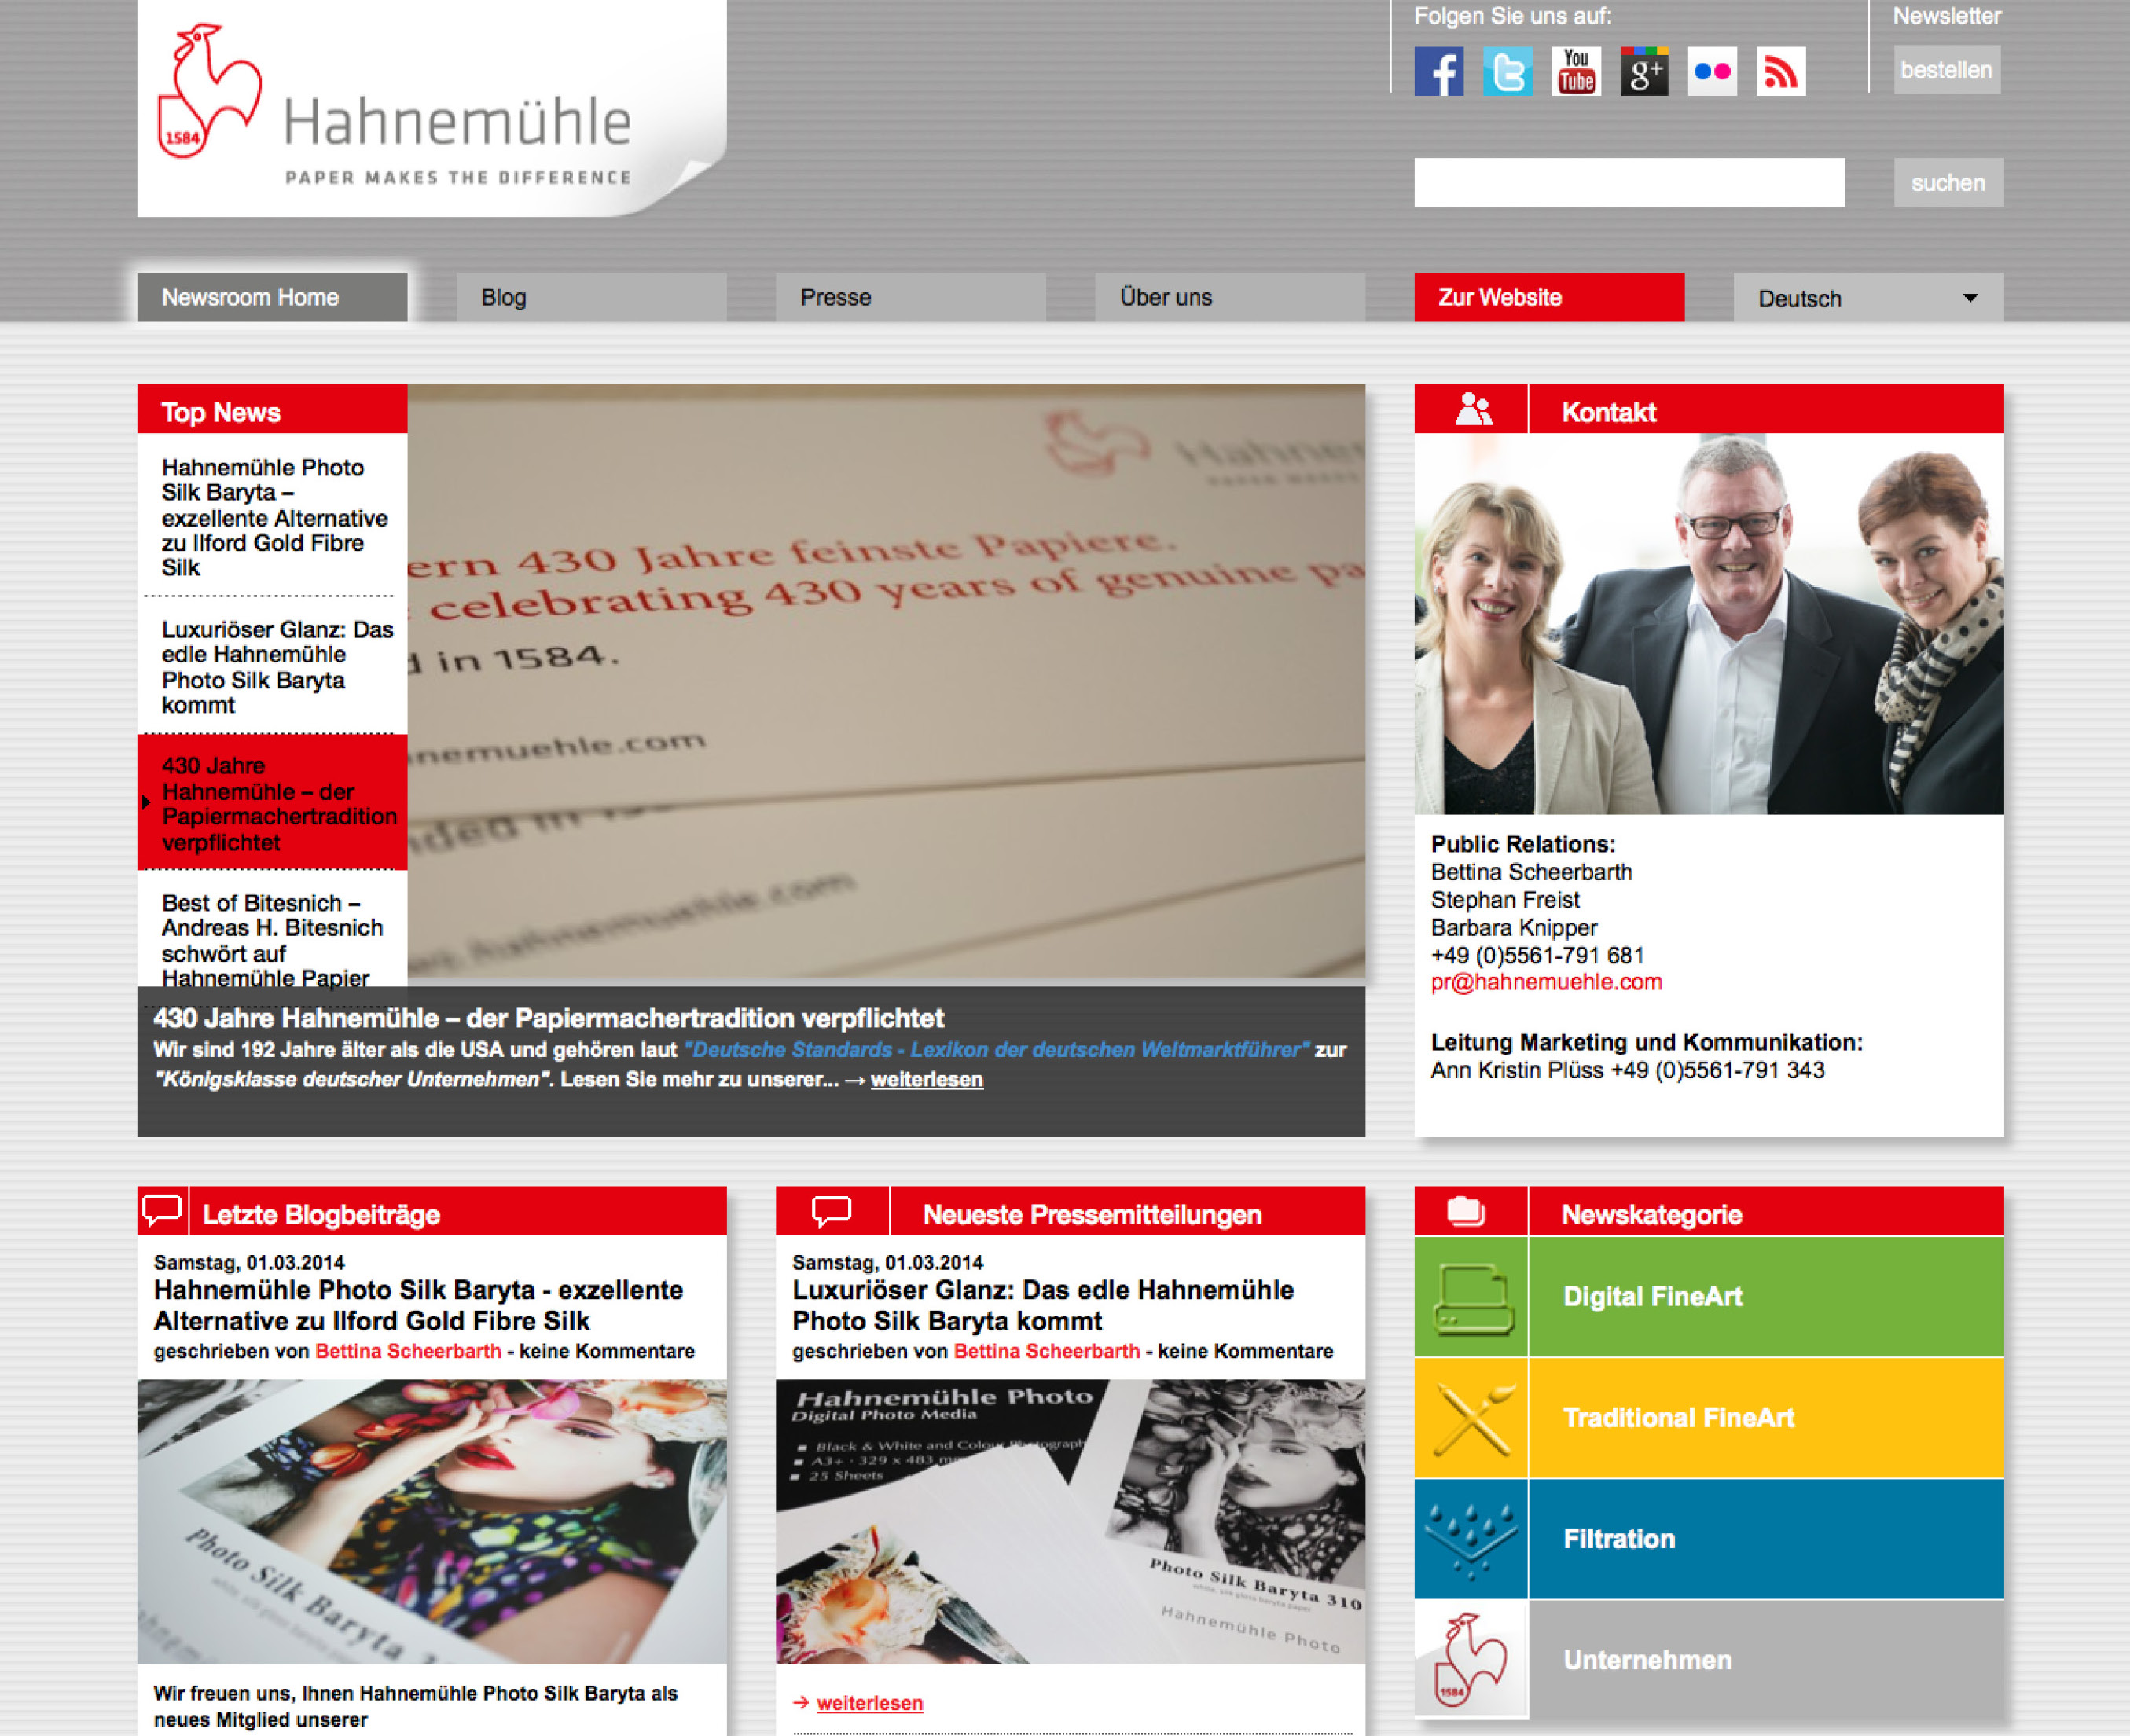 2014-Hahnemuehle-Web-Newsroom-Responsiv